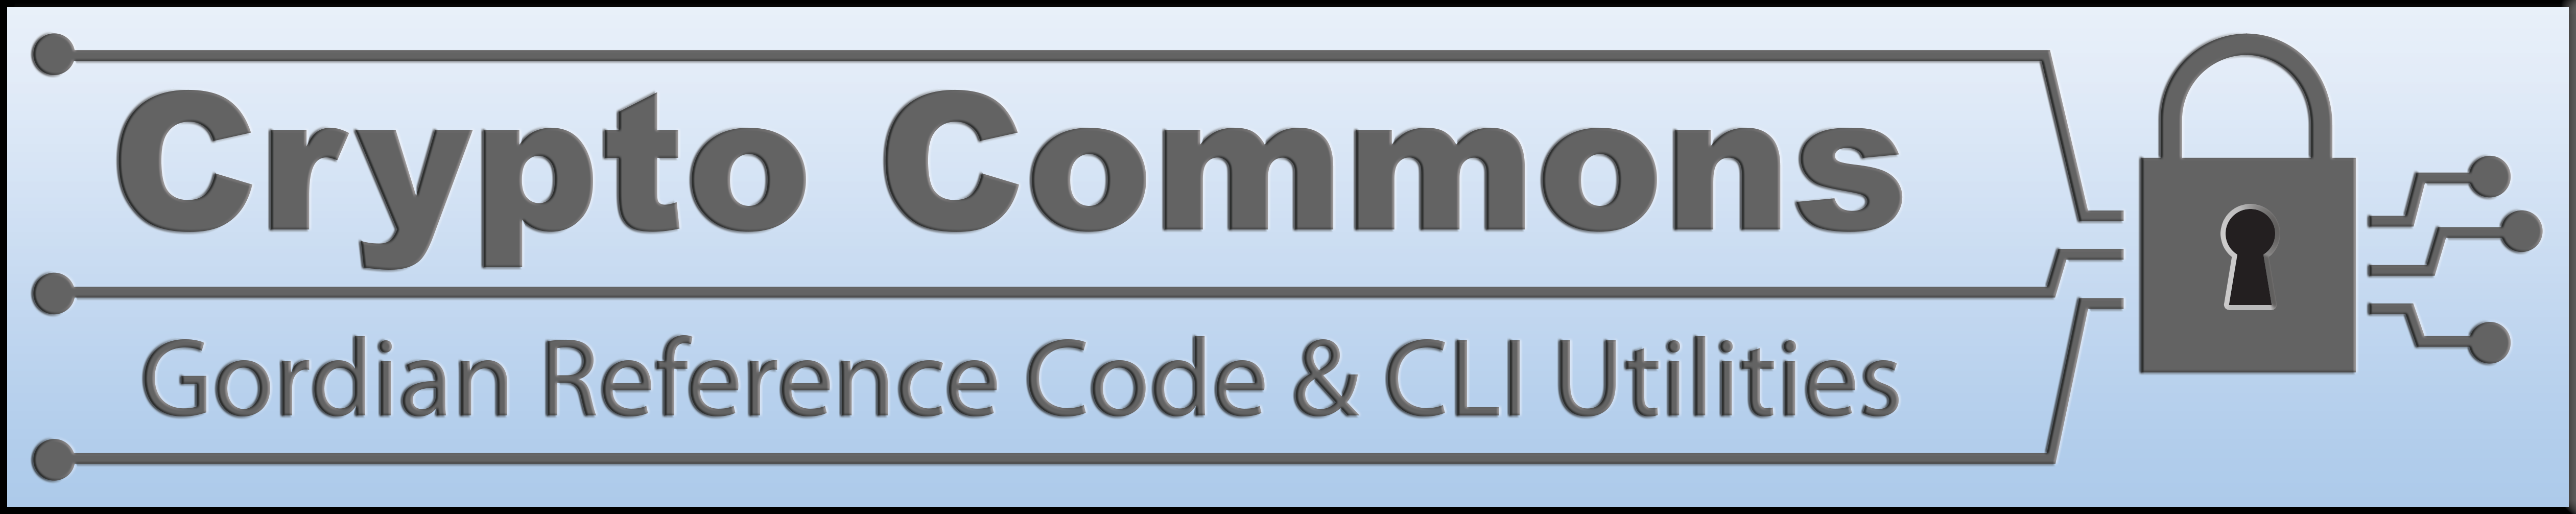 Crypto Commons